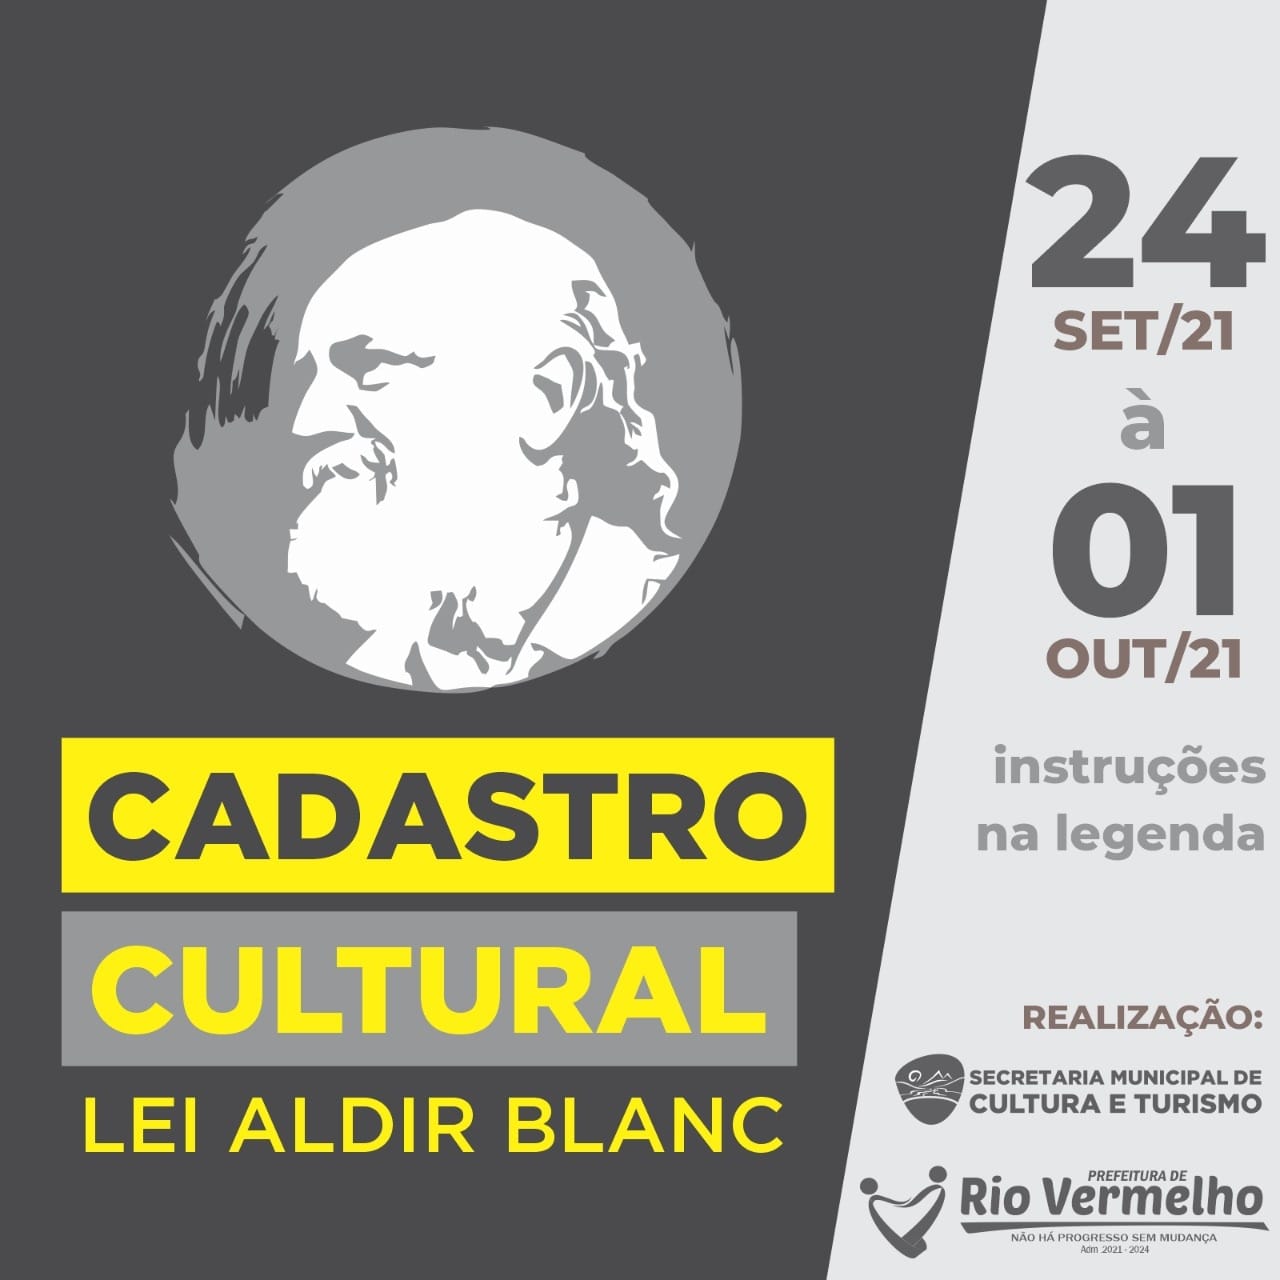 You are currently viewing CADASTRO CULTURAL LEI ALDIR BLANC